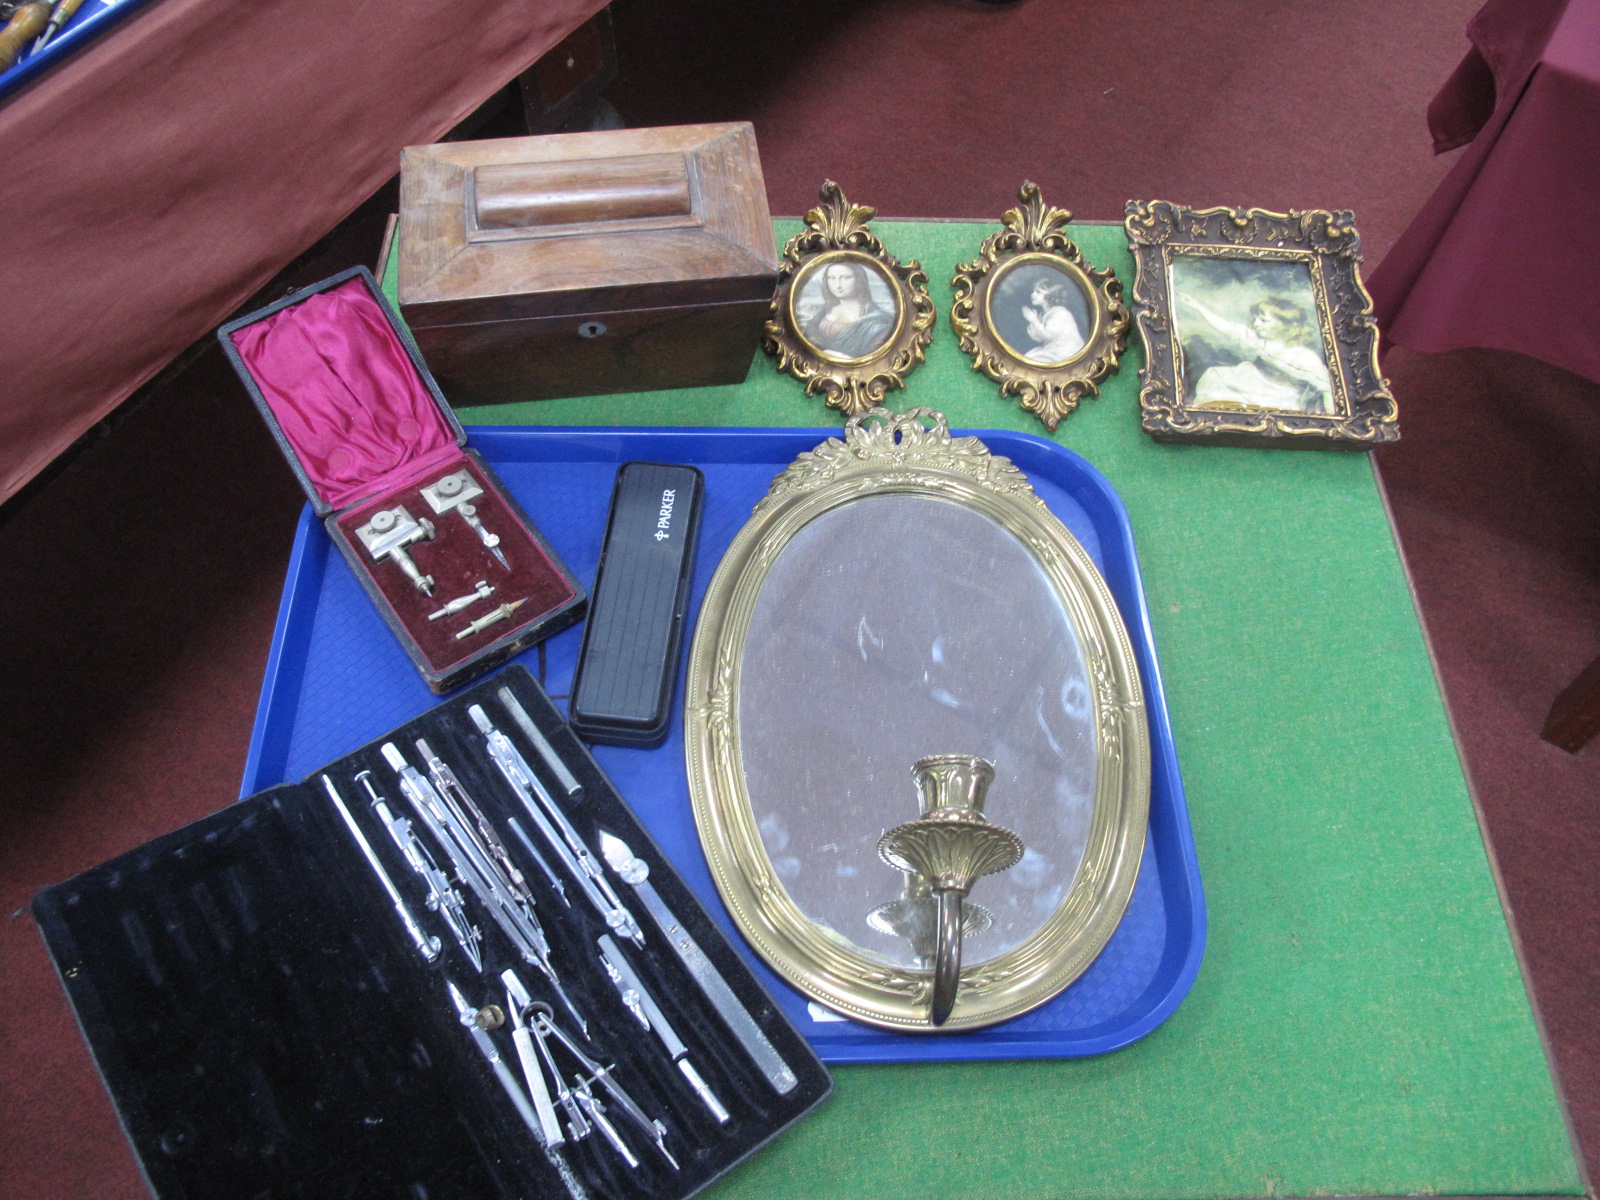 A Brass Framed Oval Wall Mirror, prints, XIX Century tea caddy, cased geometry items, Parker pen.